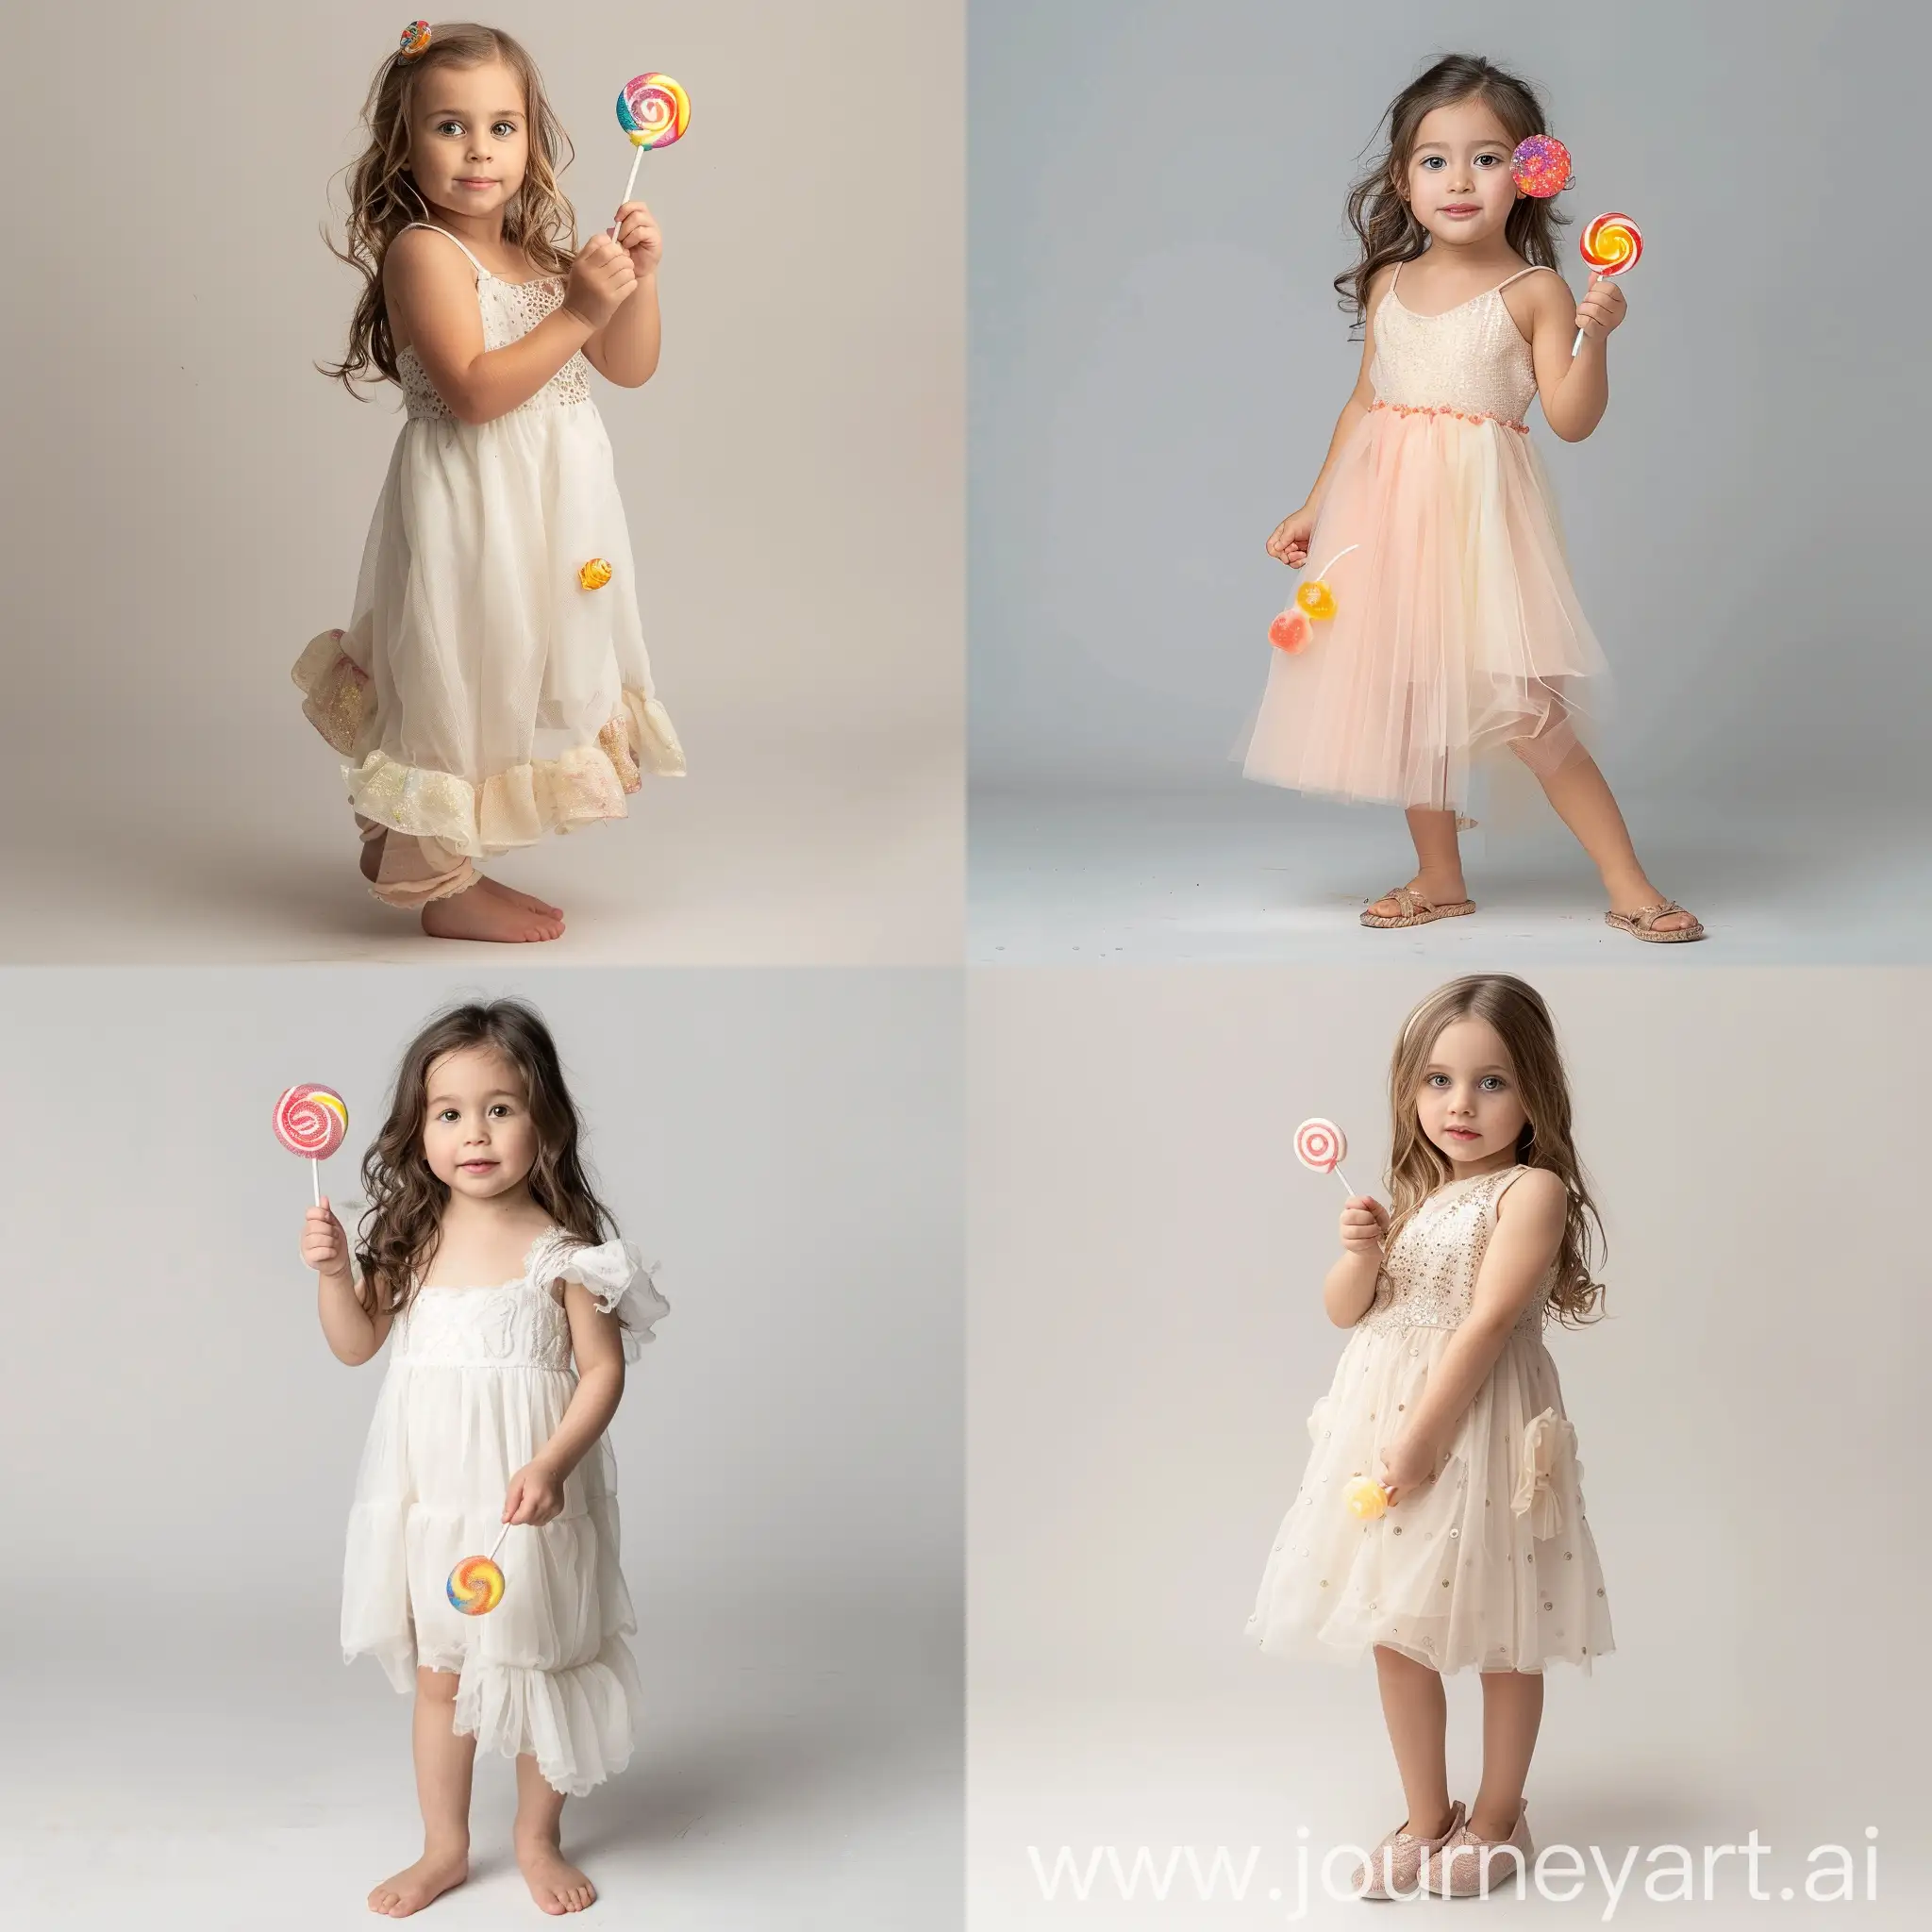 Adorable-Little-Girl-Posing-as-a-Princess-with-Lollipop